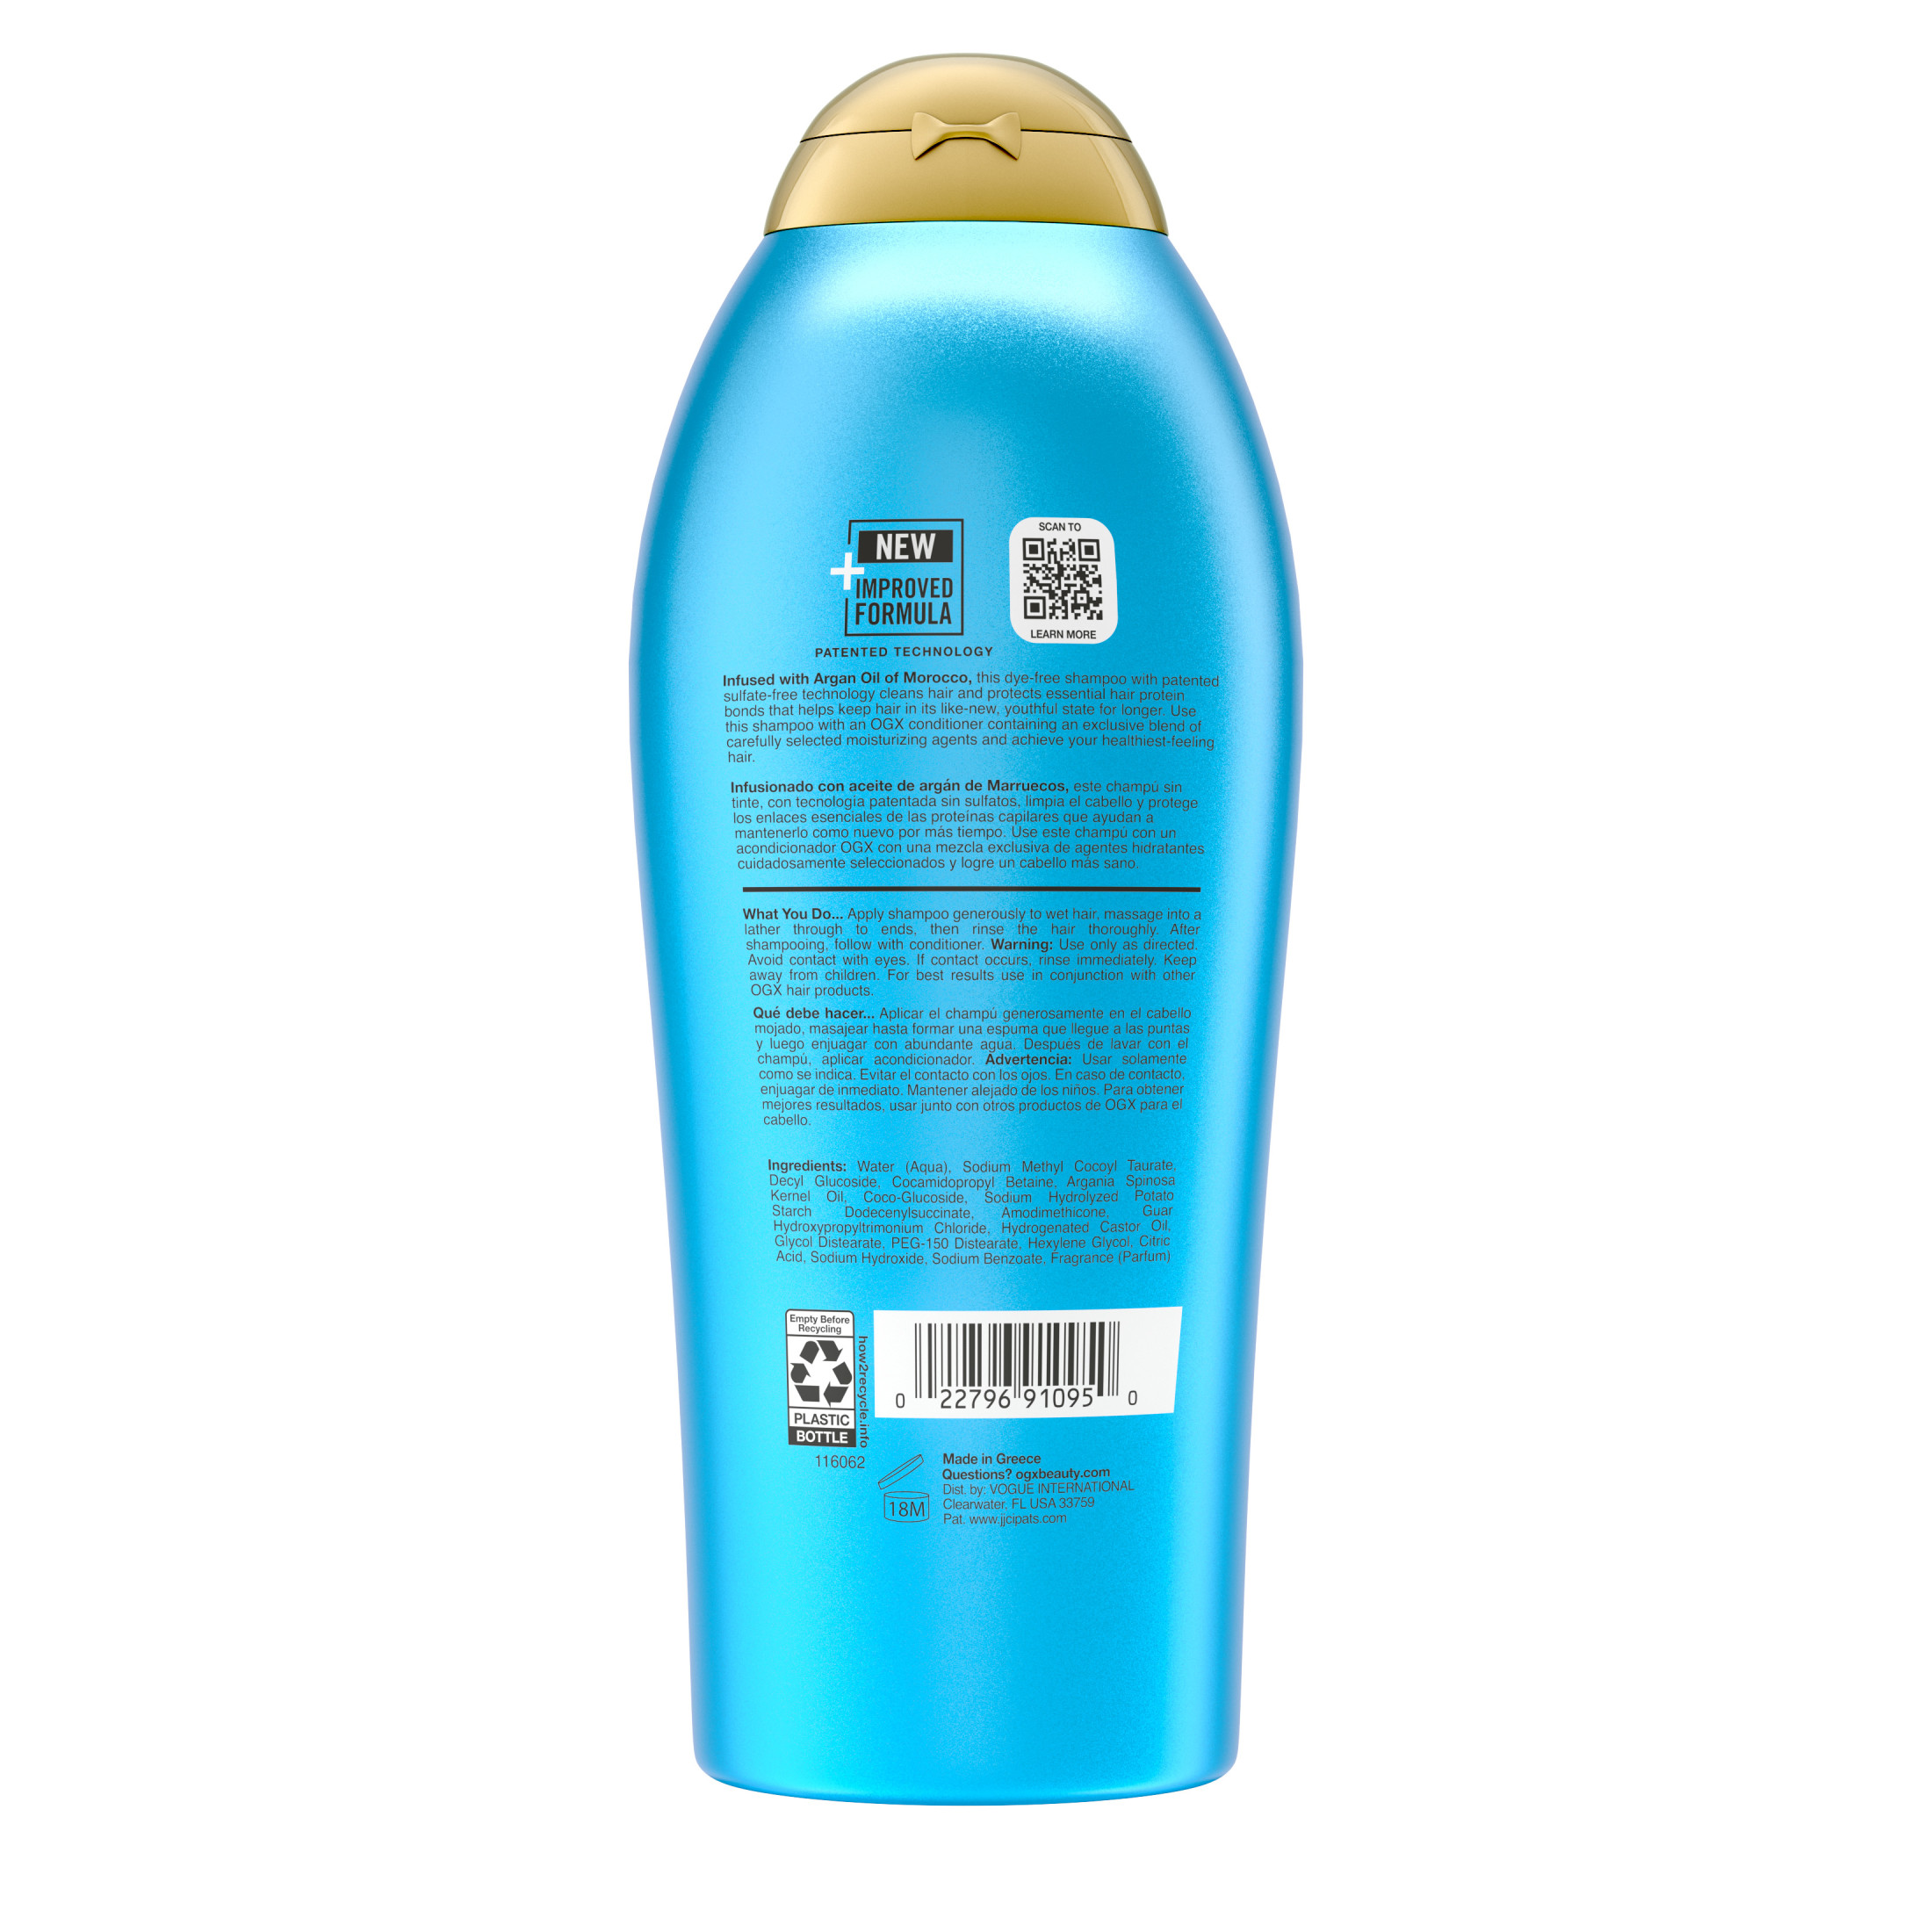 OGX Renewing + Argan Oil Moisturizing Daily Shampoo to Soften & Strengthen, 25.4 fl oz - image 3 of 9